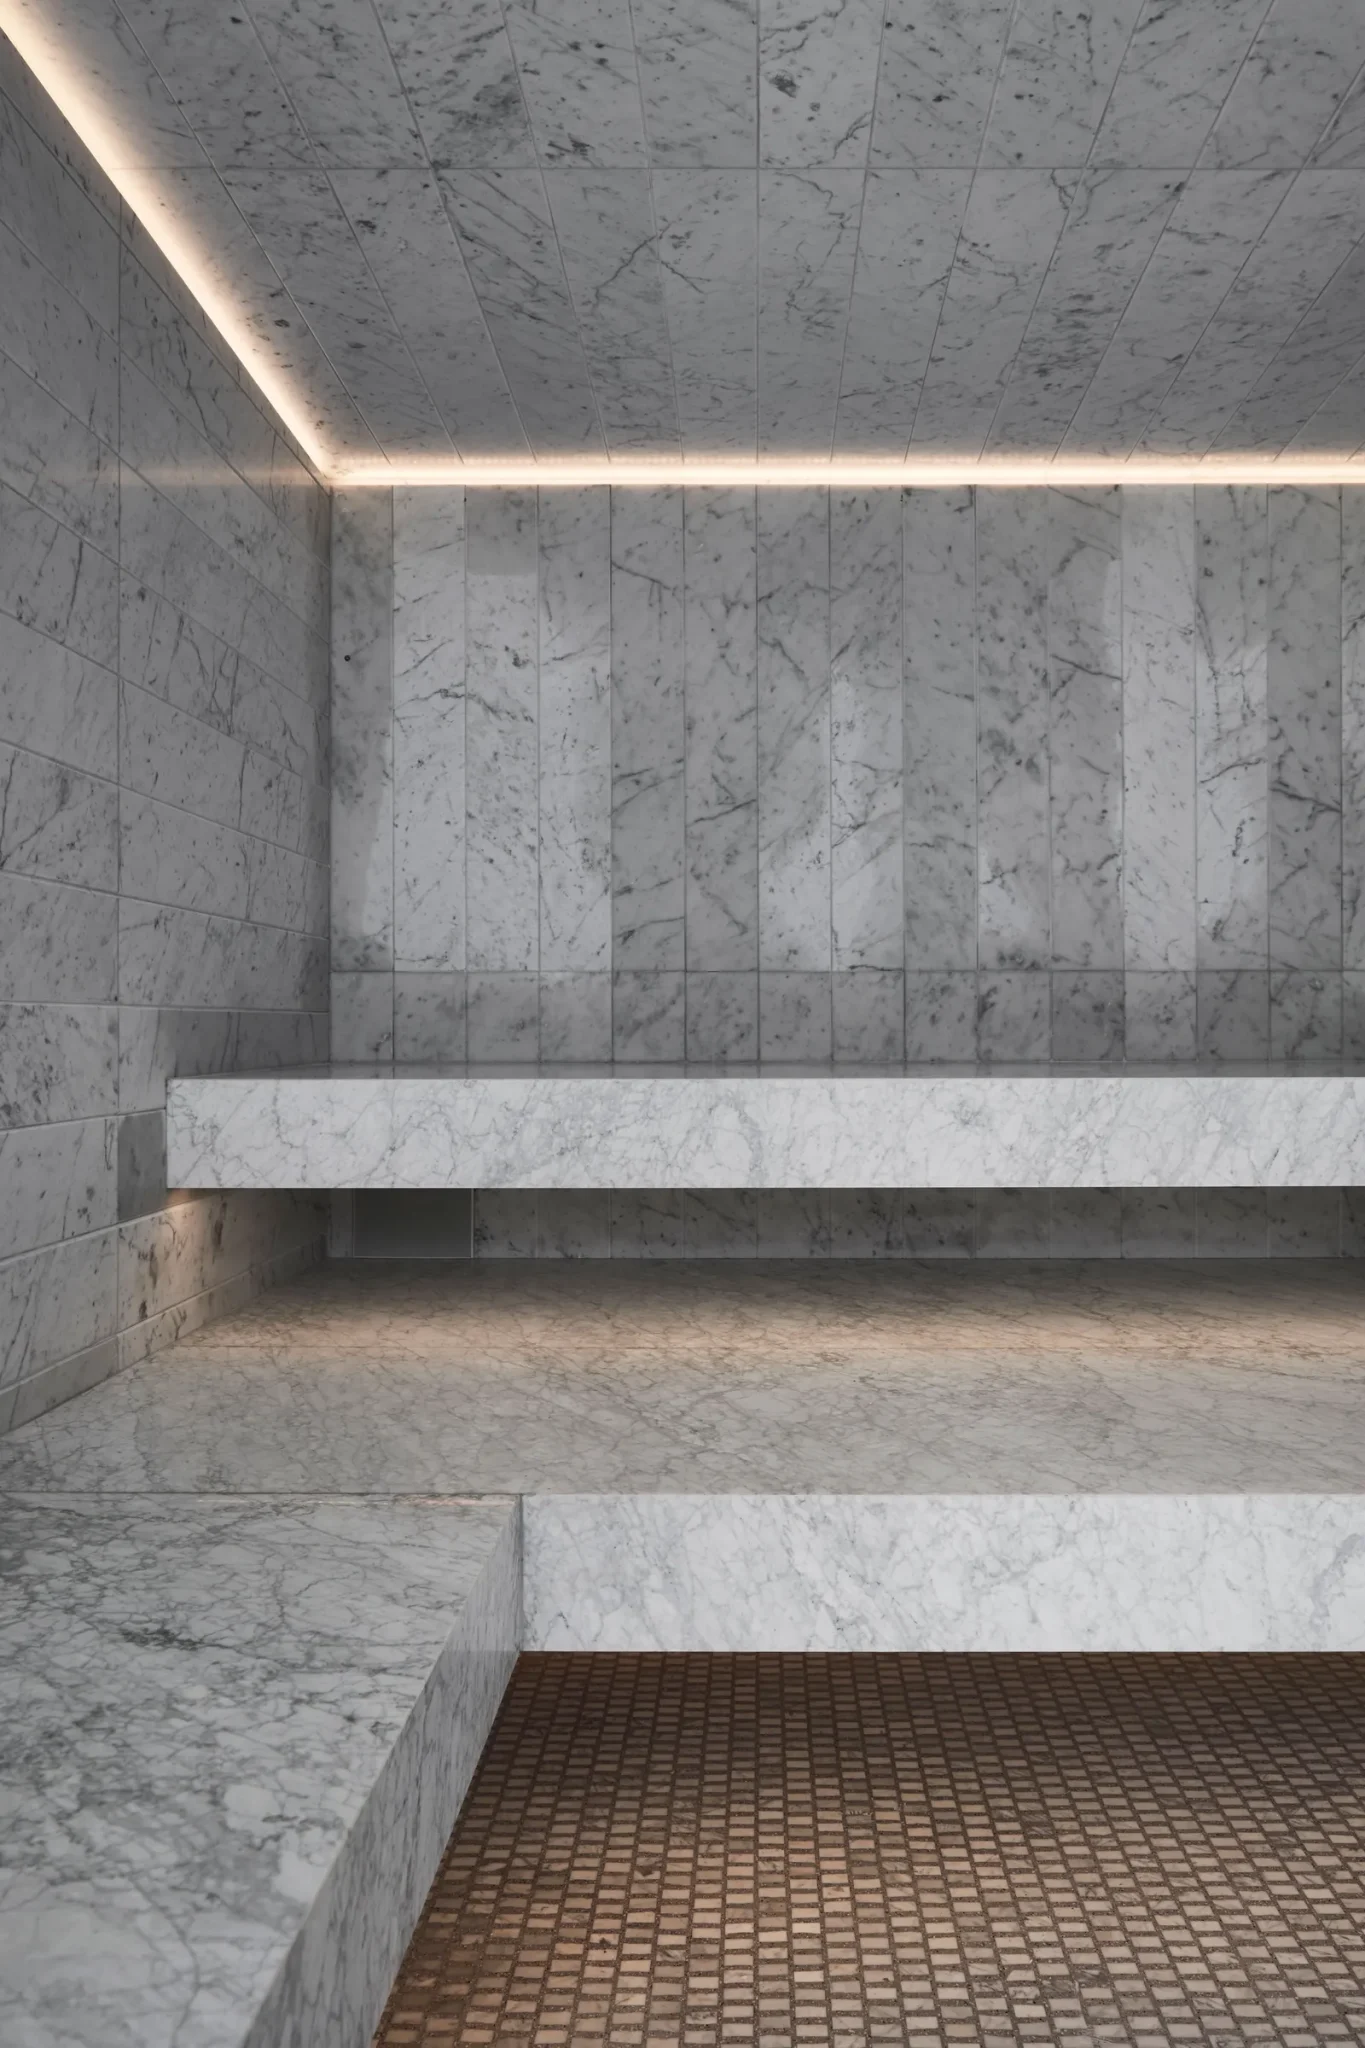 Carrara marble walls and Carrara terrazzo floors in the steam room.